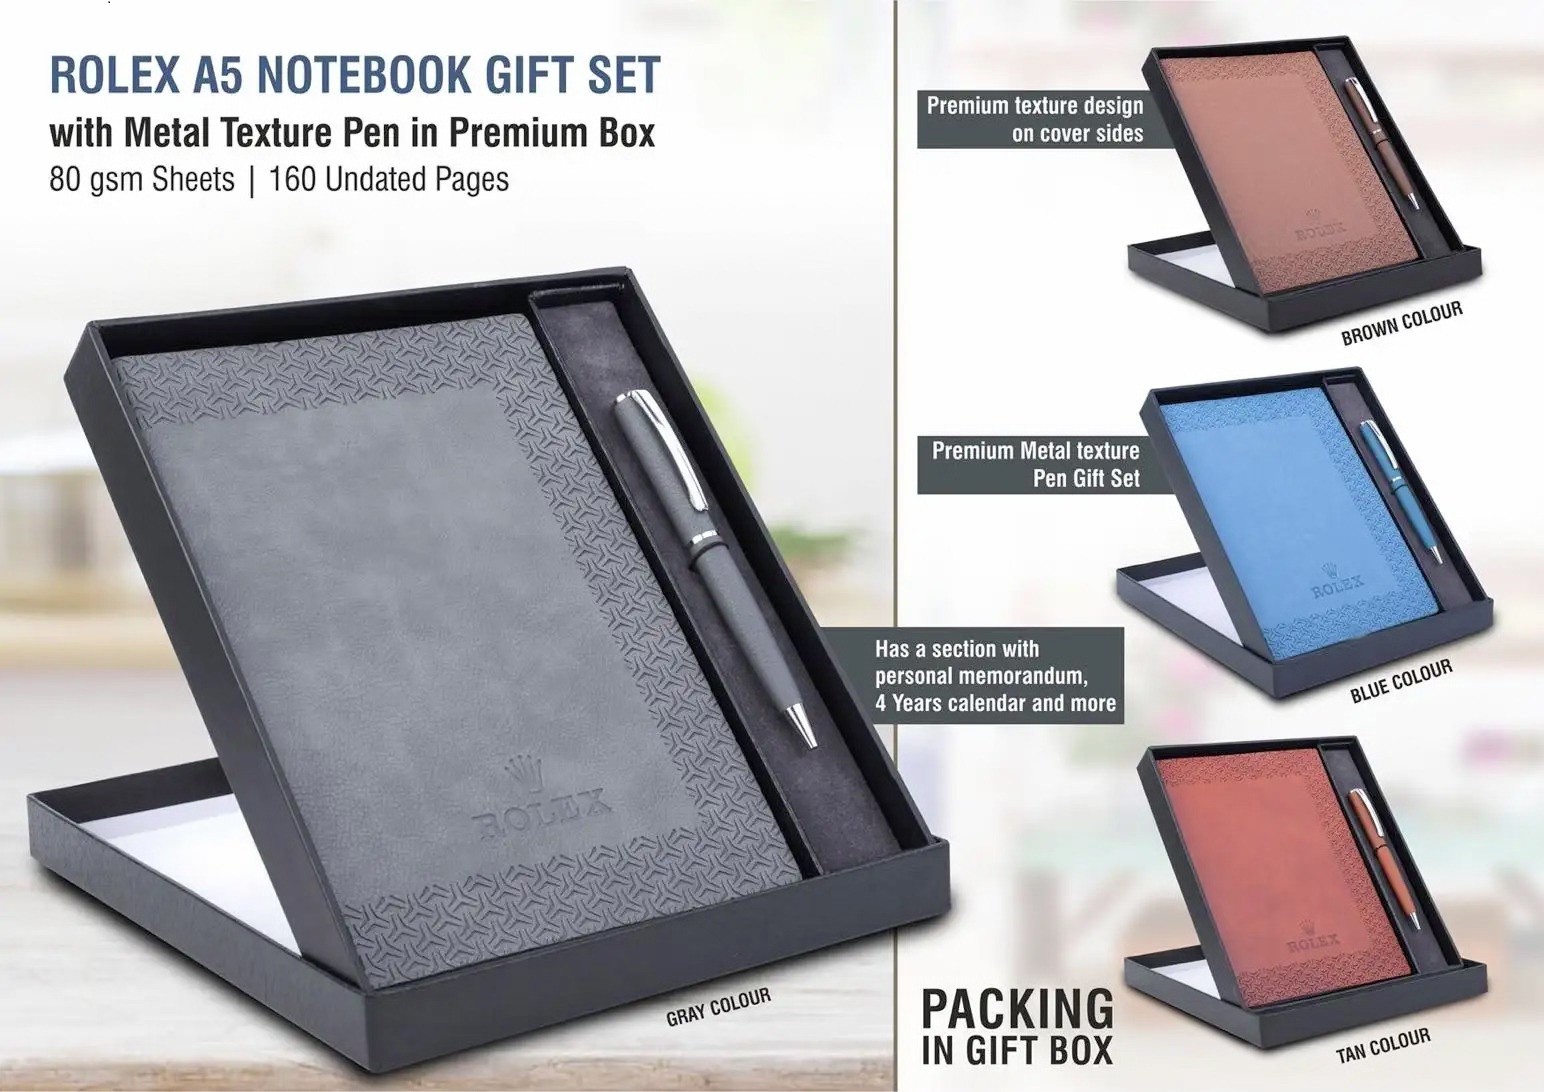 Rolex Notebook With Metal Texture Pen Gift Set In Premium Box